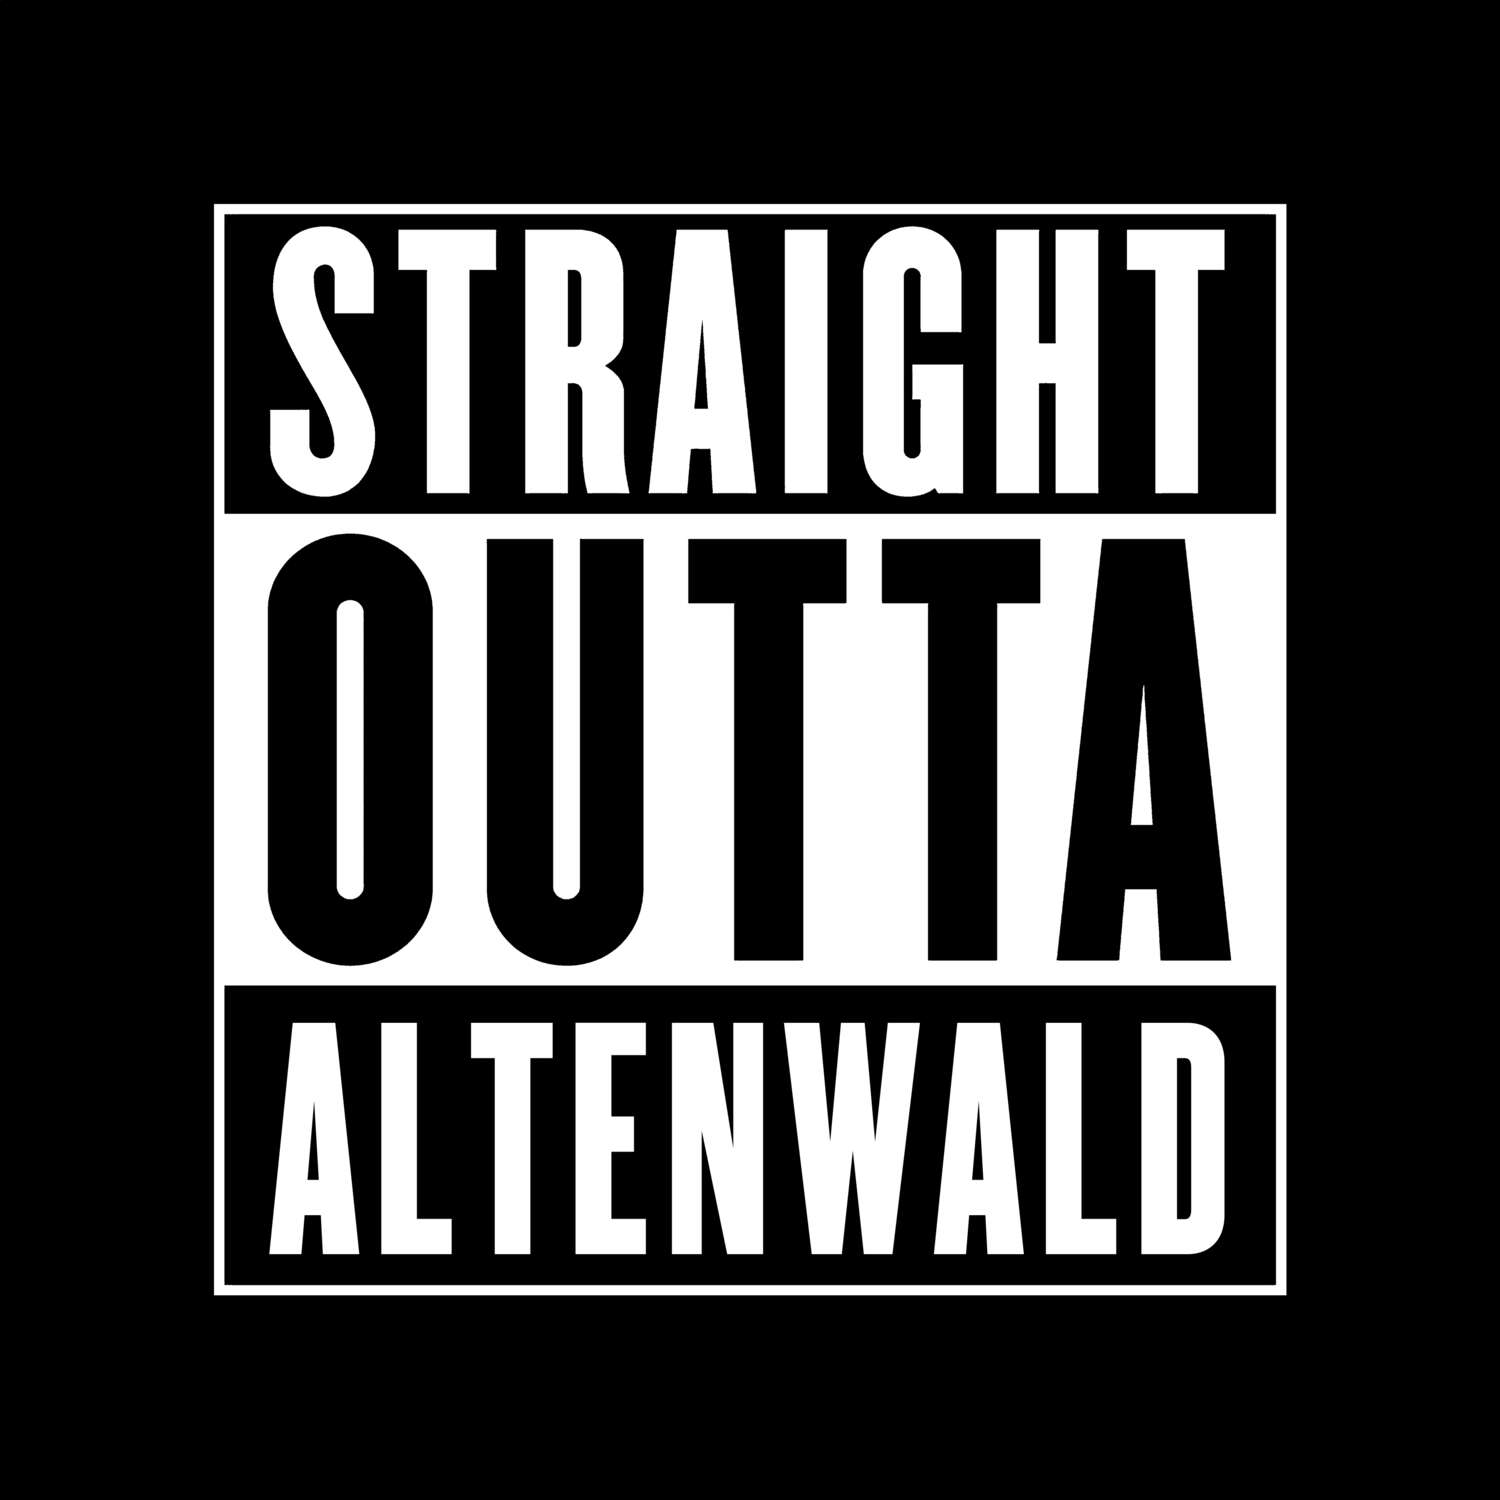 Altenwald T-Shirt »Straight Outta«